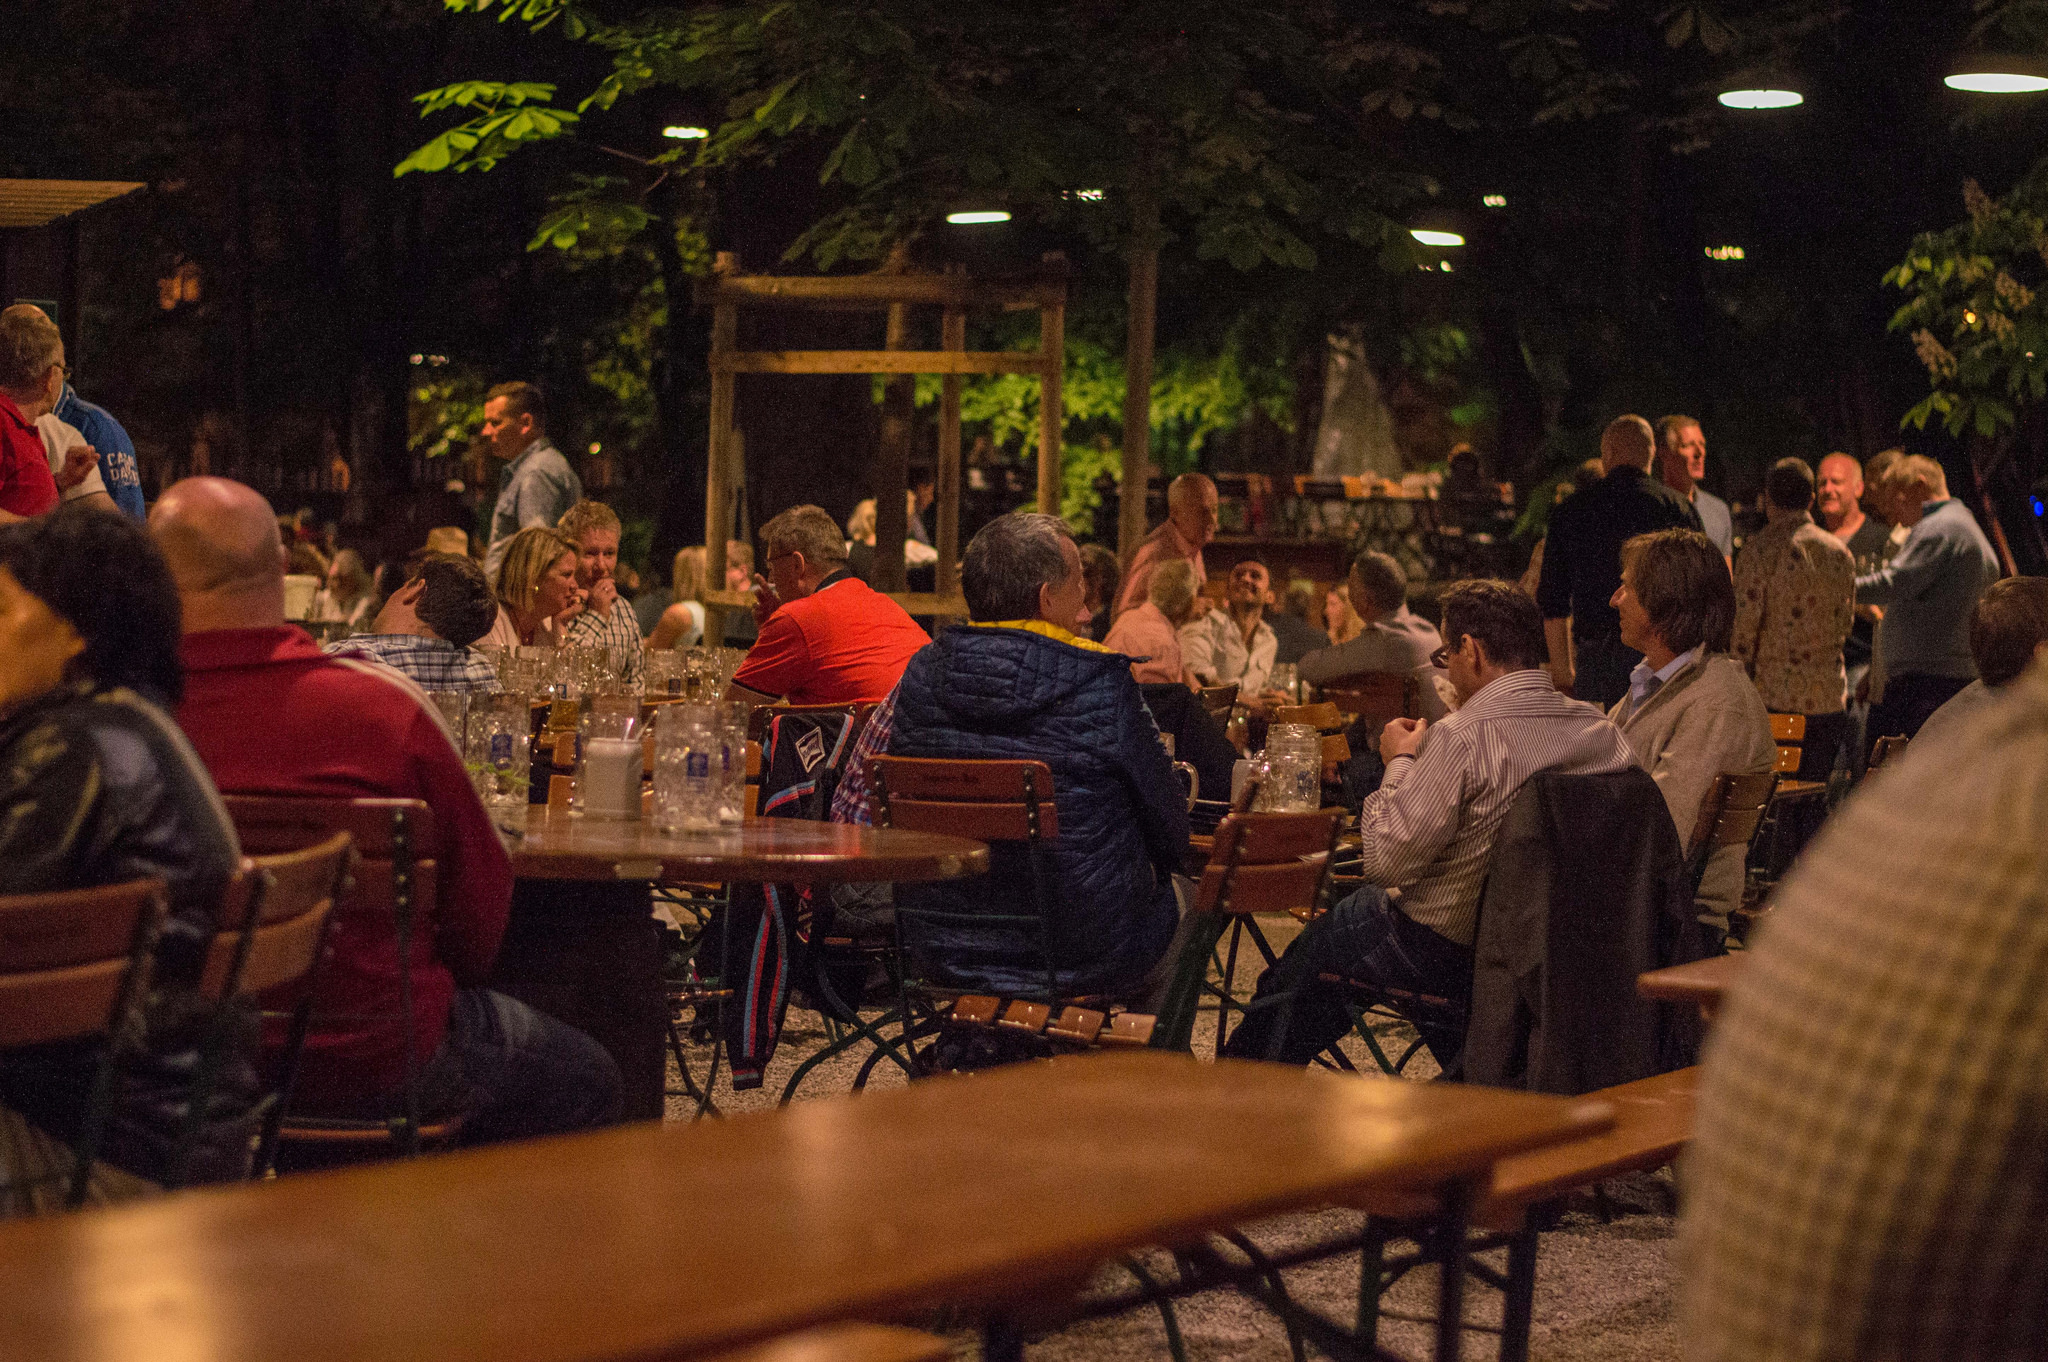 The 10 Best Beer Halls And Beer Gardens In Munich